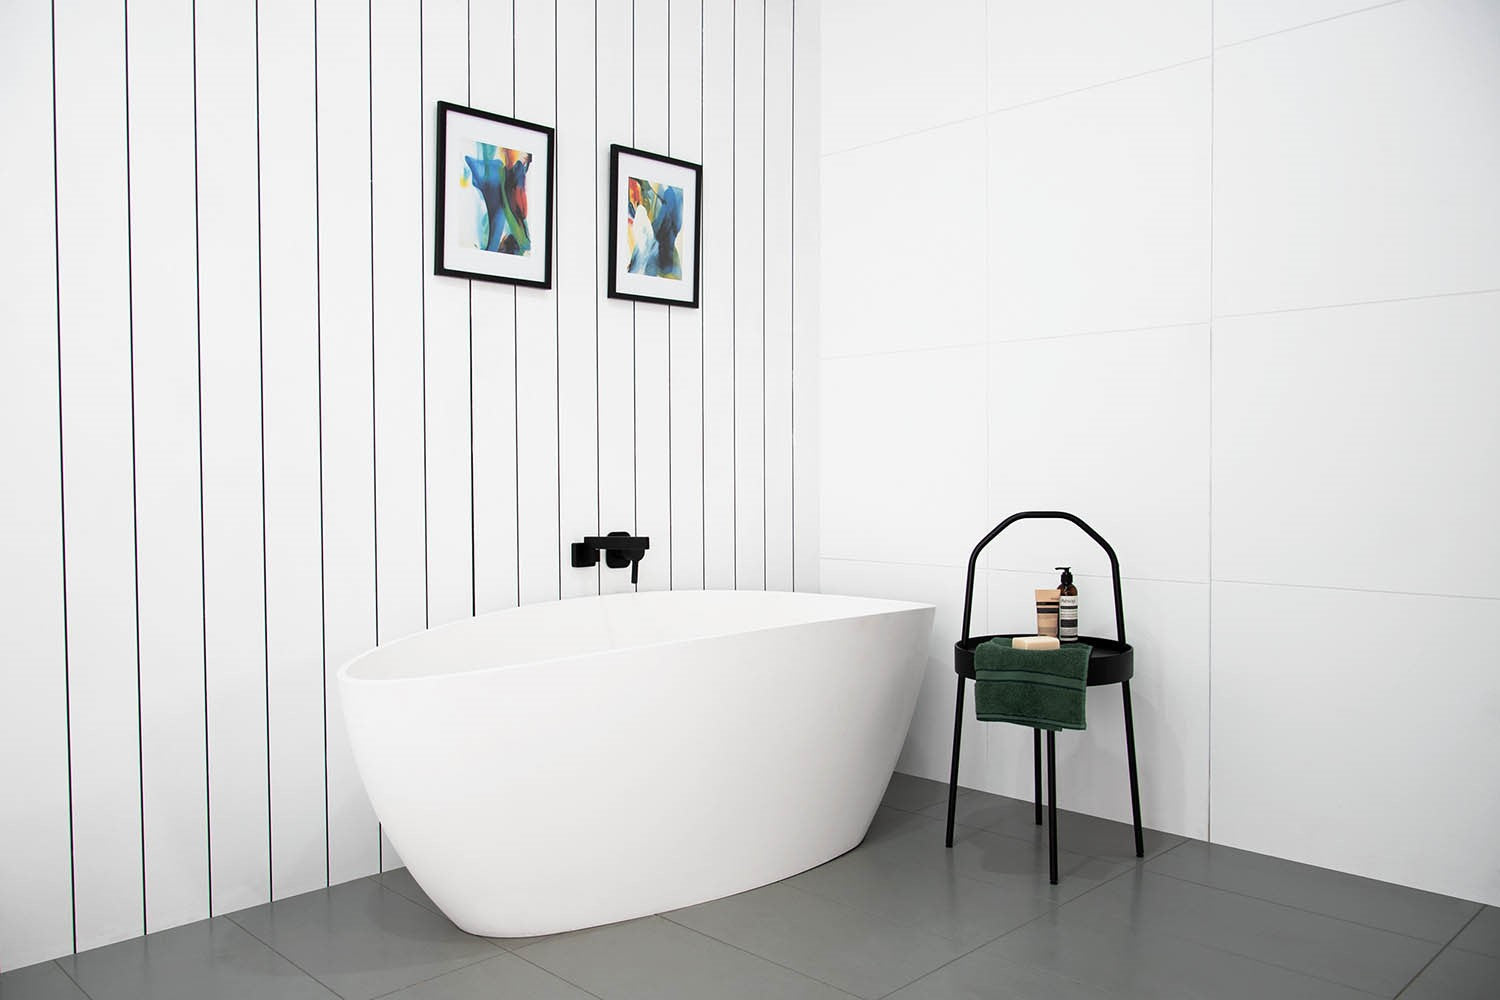 ADP Tranquil Freestanding Bath